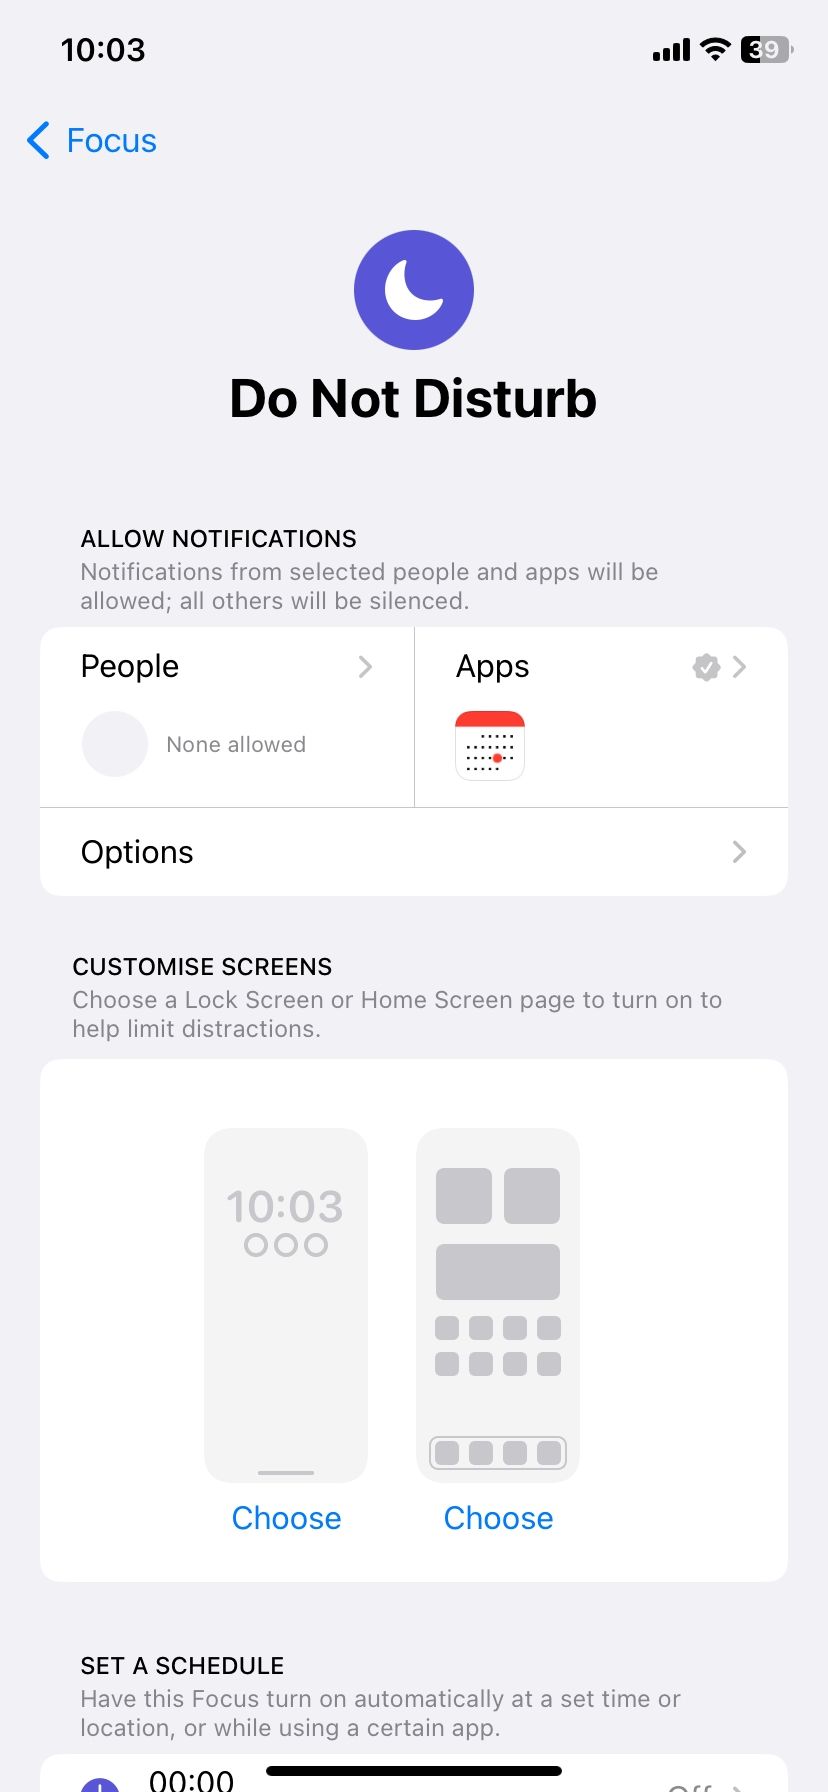 Do Not Disturb mode in iOS